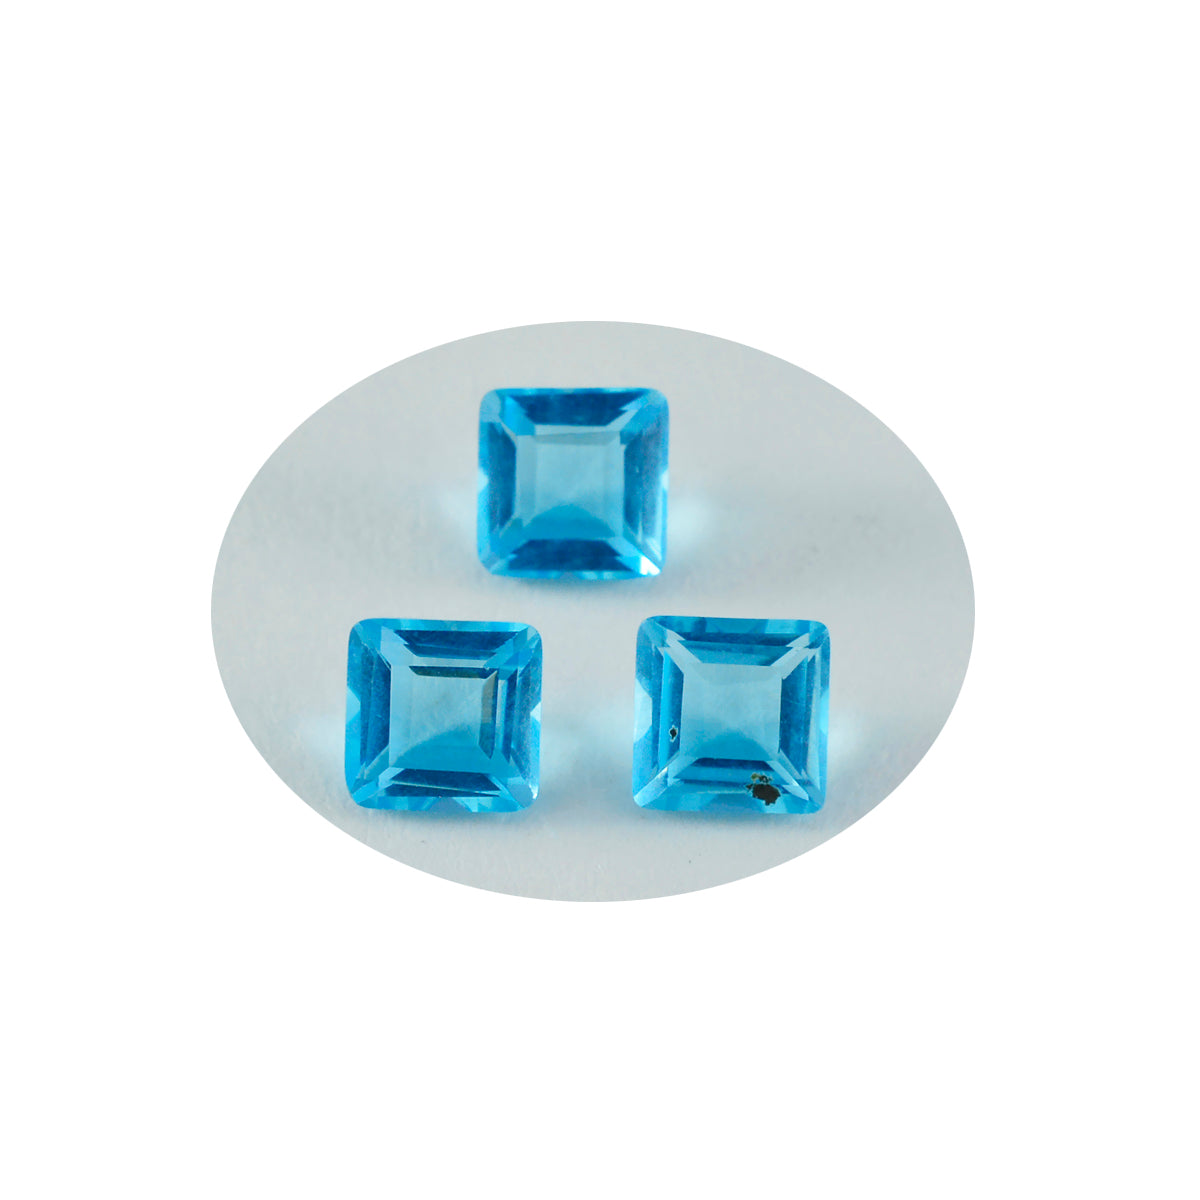 Riyogems 1 Stück blauer Topas, CZ, facettiert, 8 x 8 mm, quadratische Form, hübscher Qualitäts-Edelstein